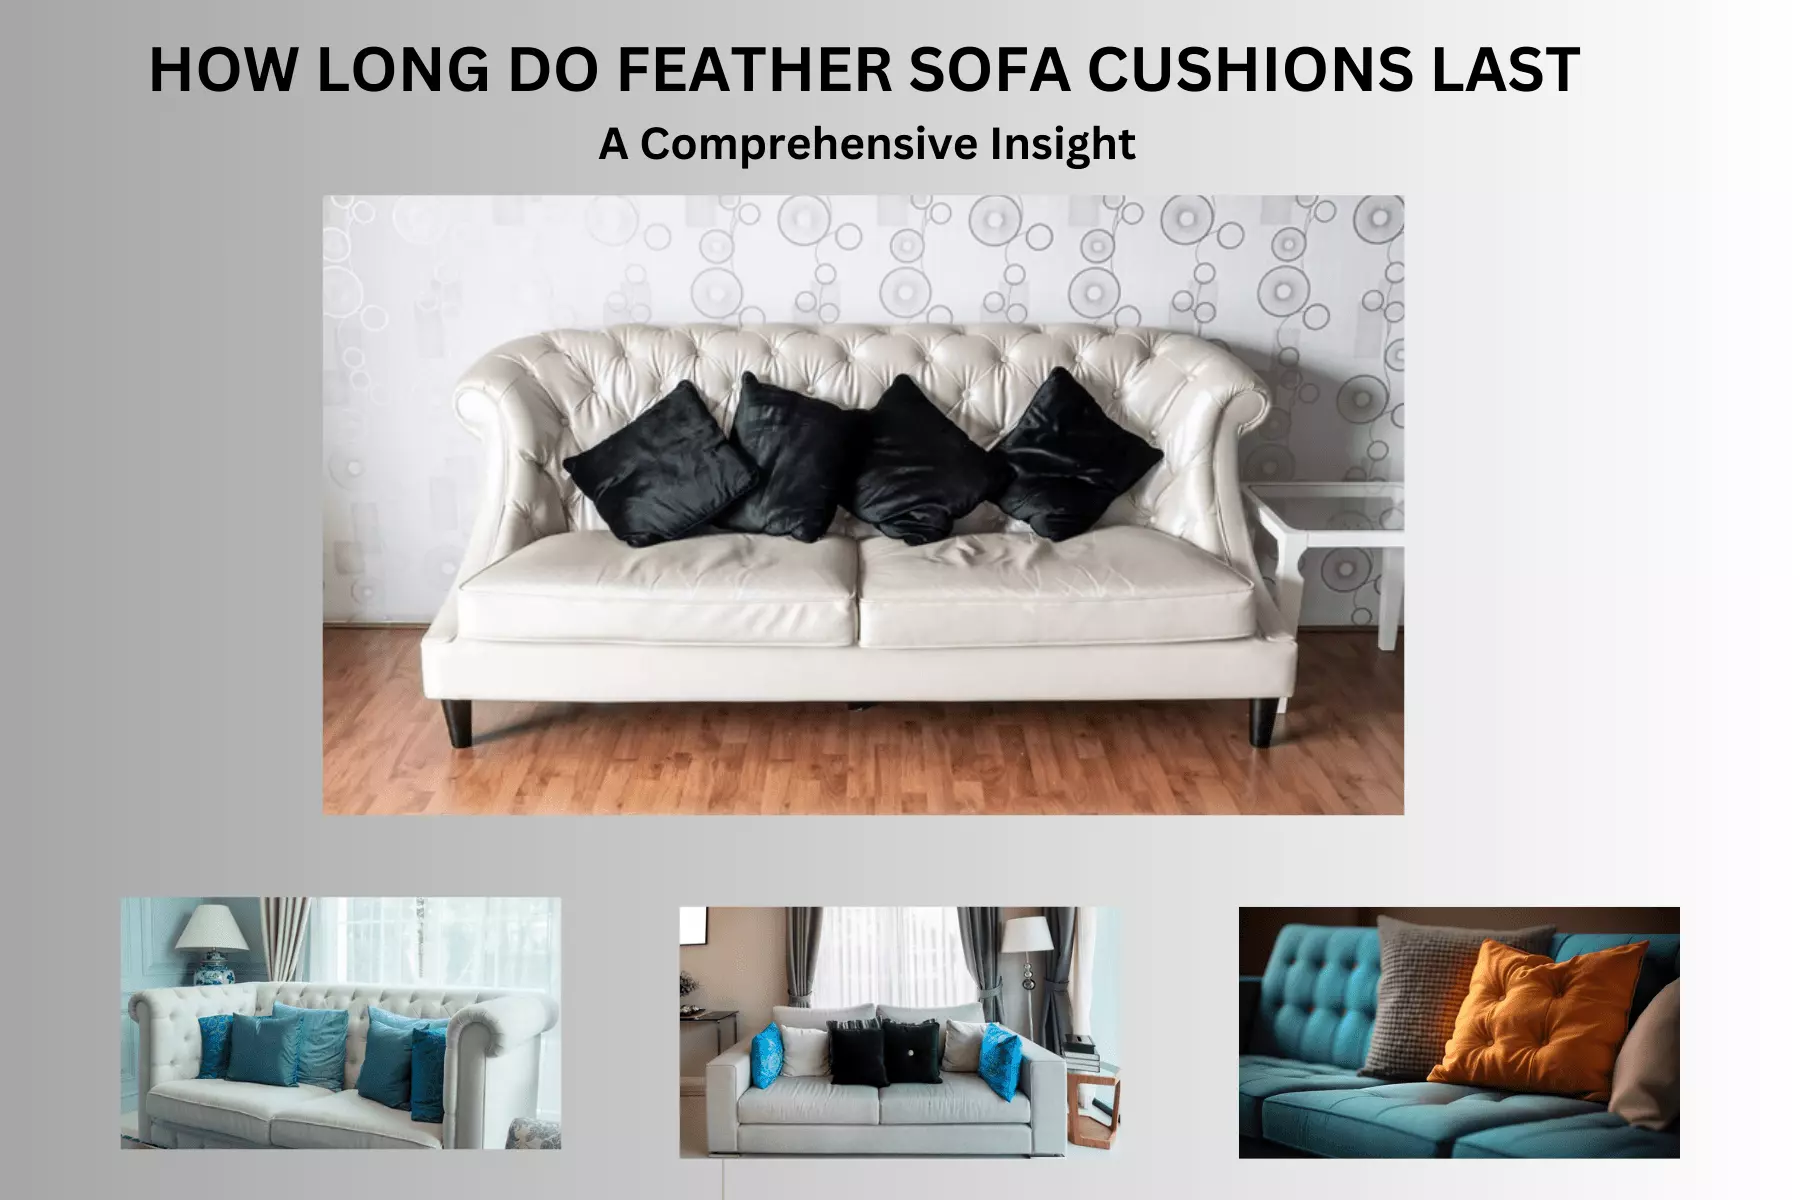 How Long Do Feather Sofa Cushions Last? A Comprehensive Insight